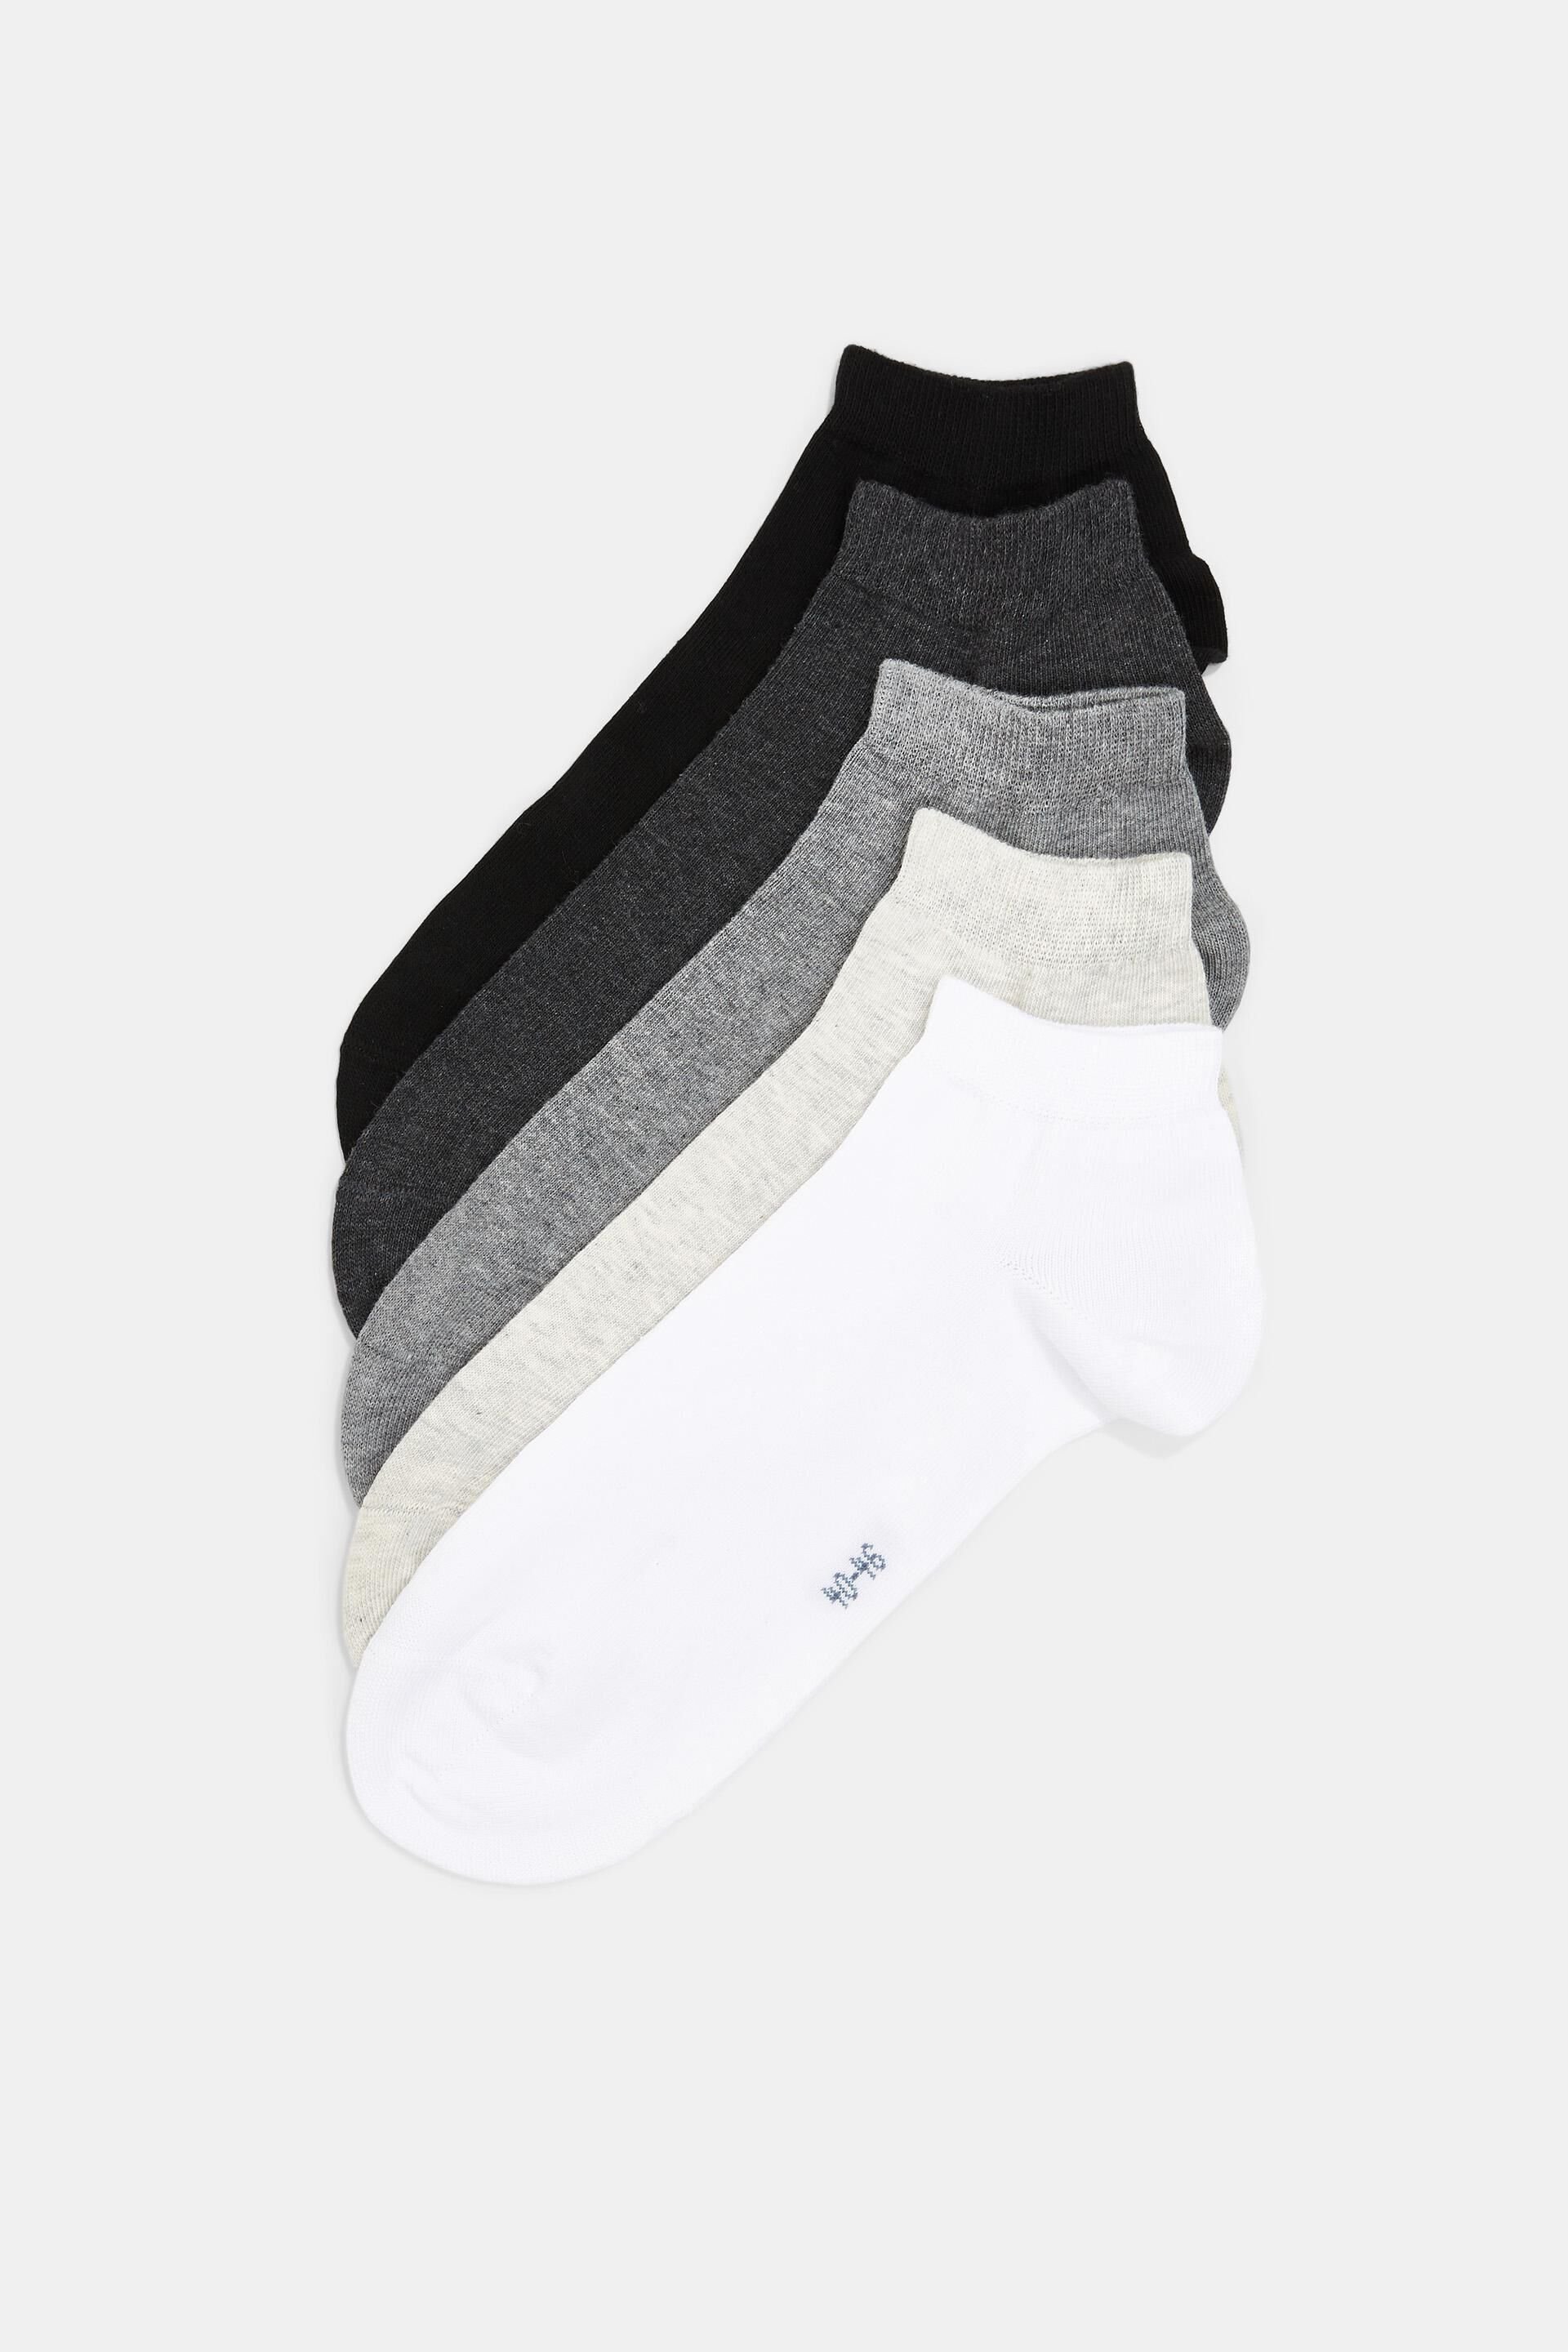 Esprit organic socks, 5-pack of sneaker cotton